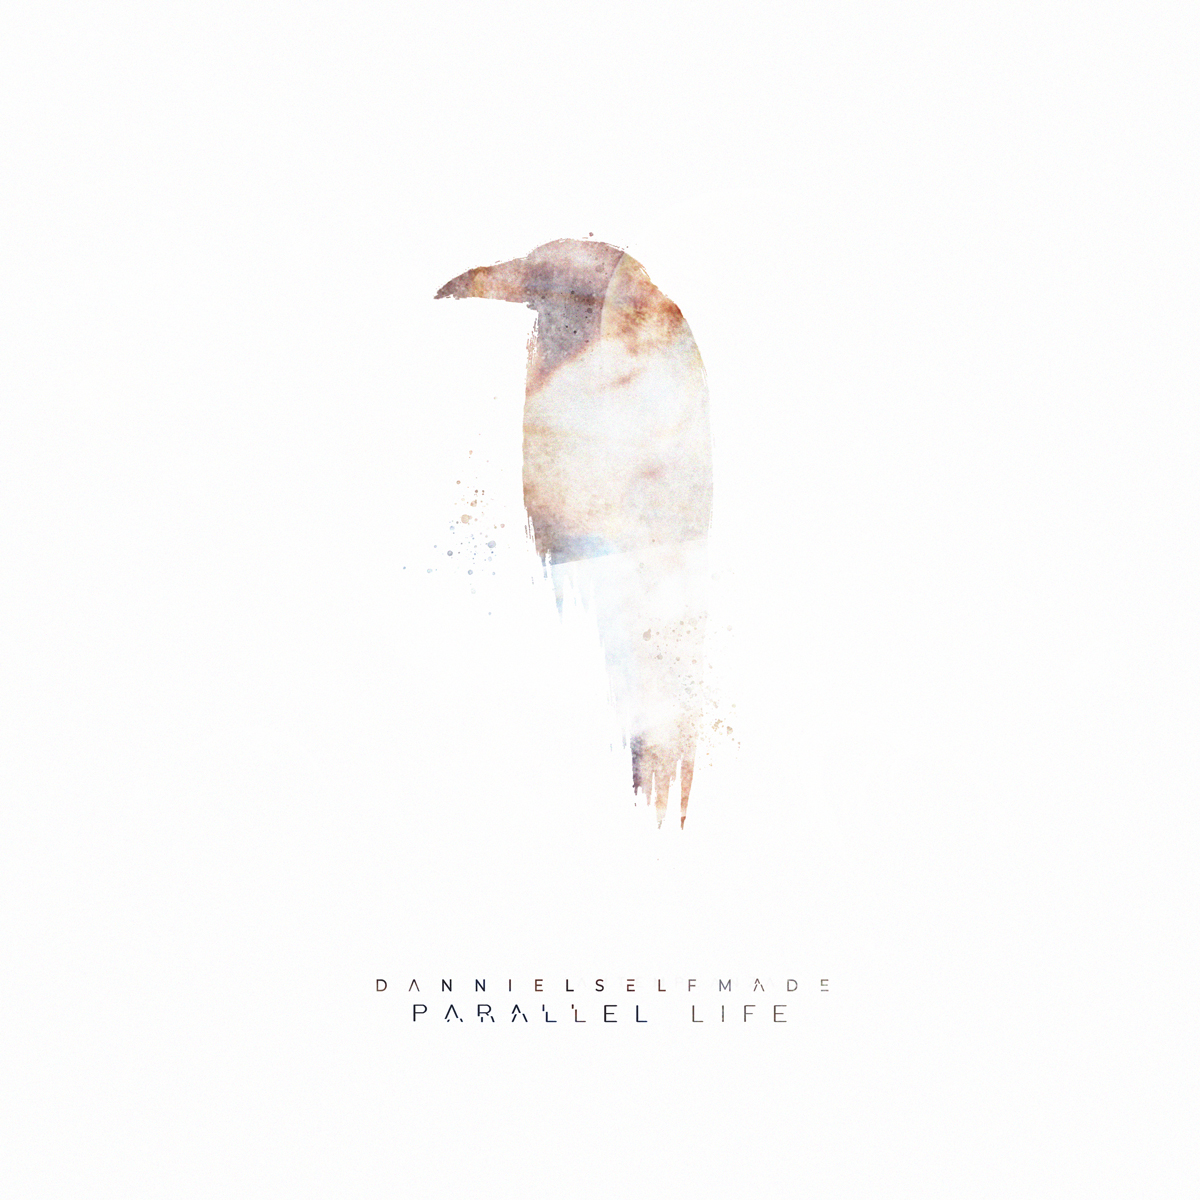 Danniel Selfmade – “Parallel Life” album